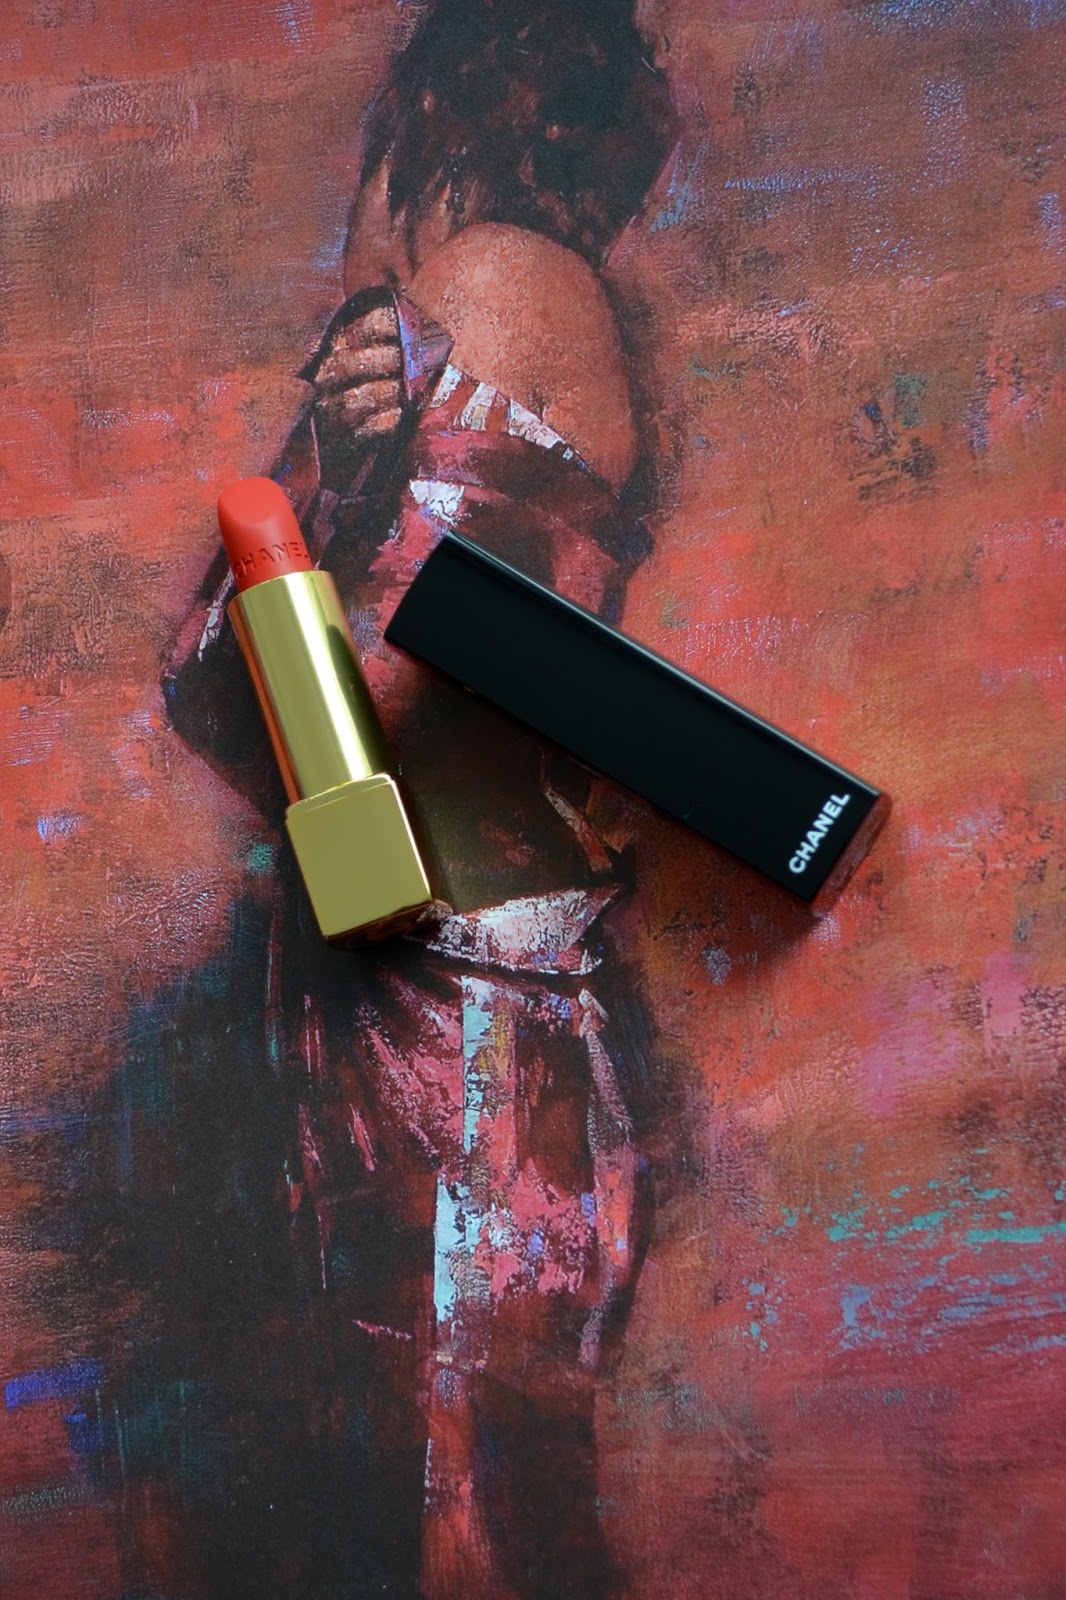 chanel lipstick 108